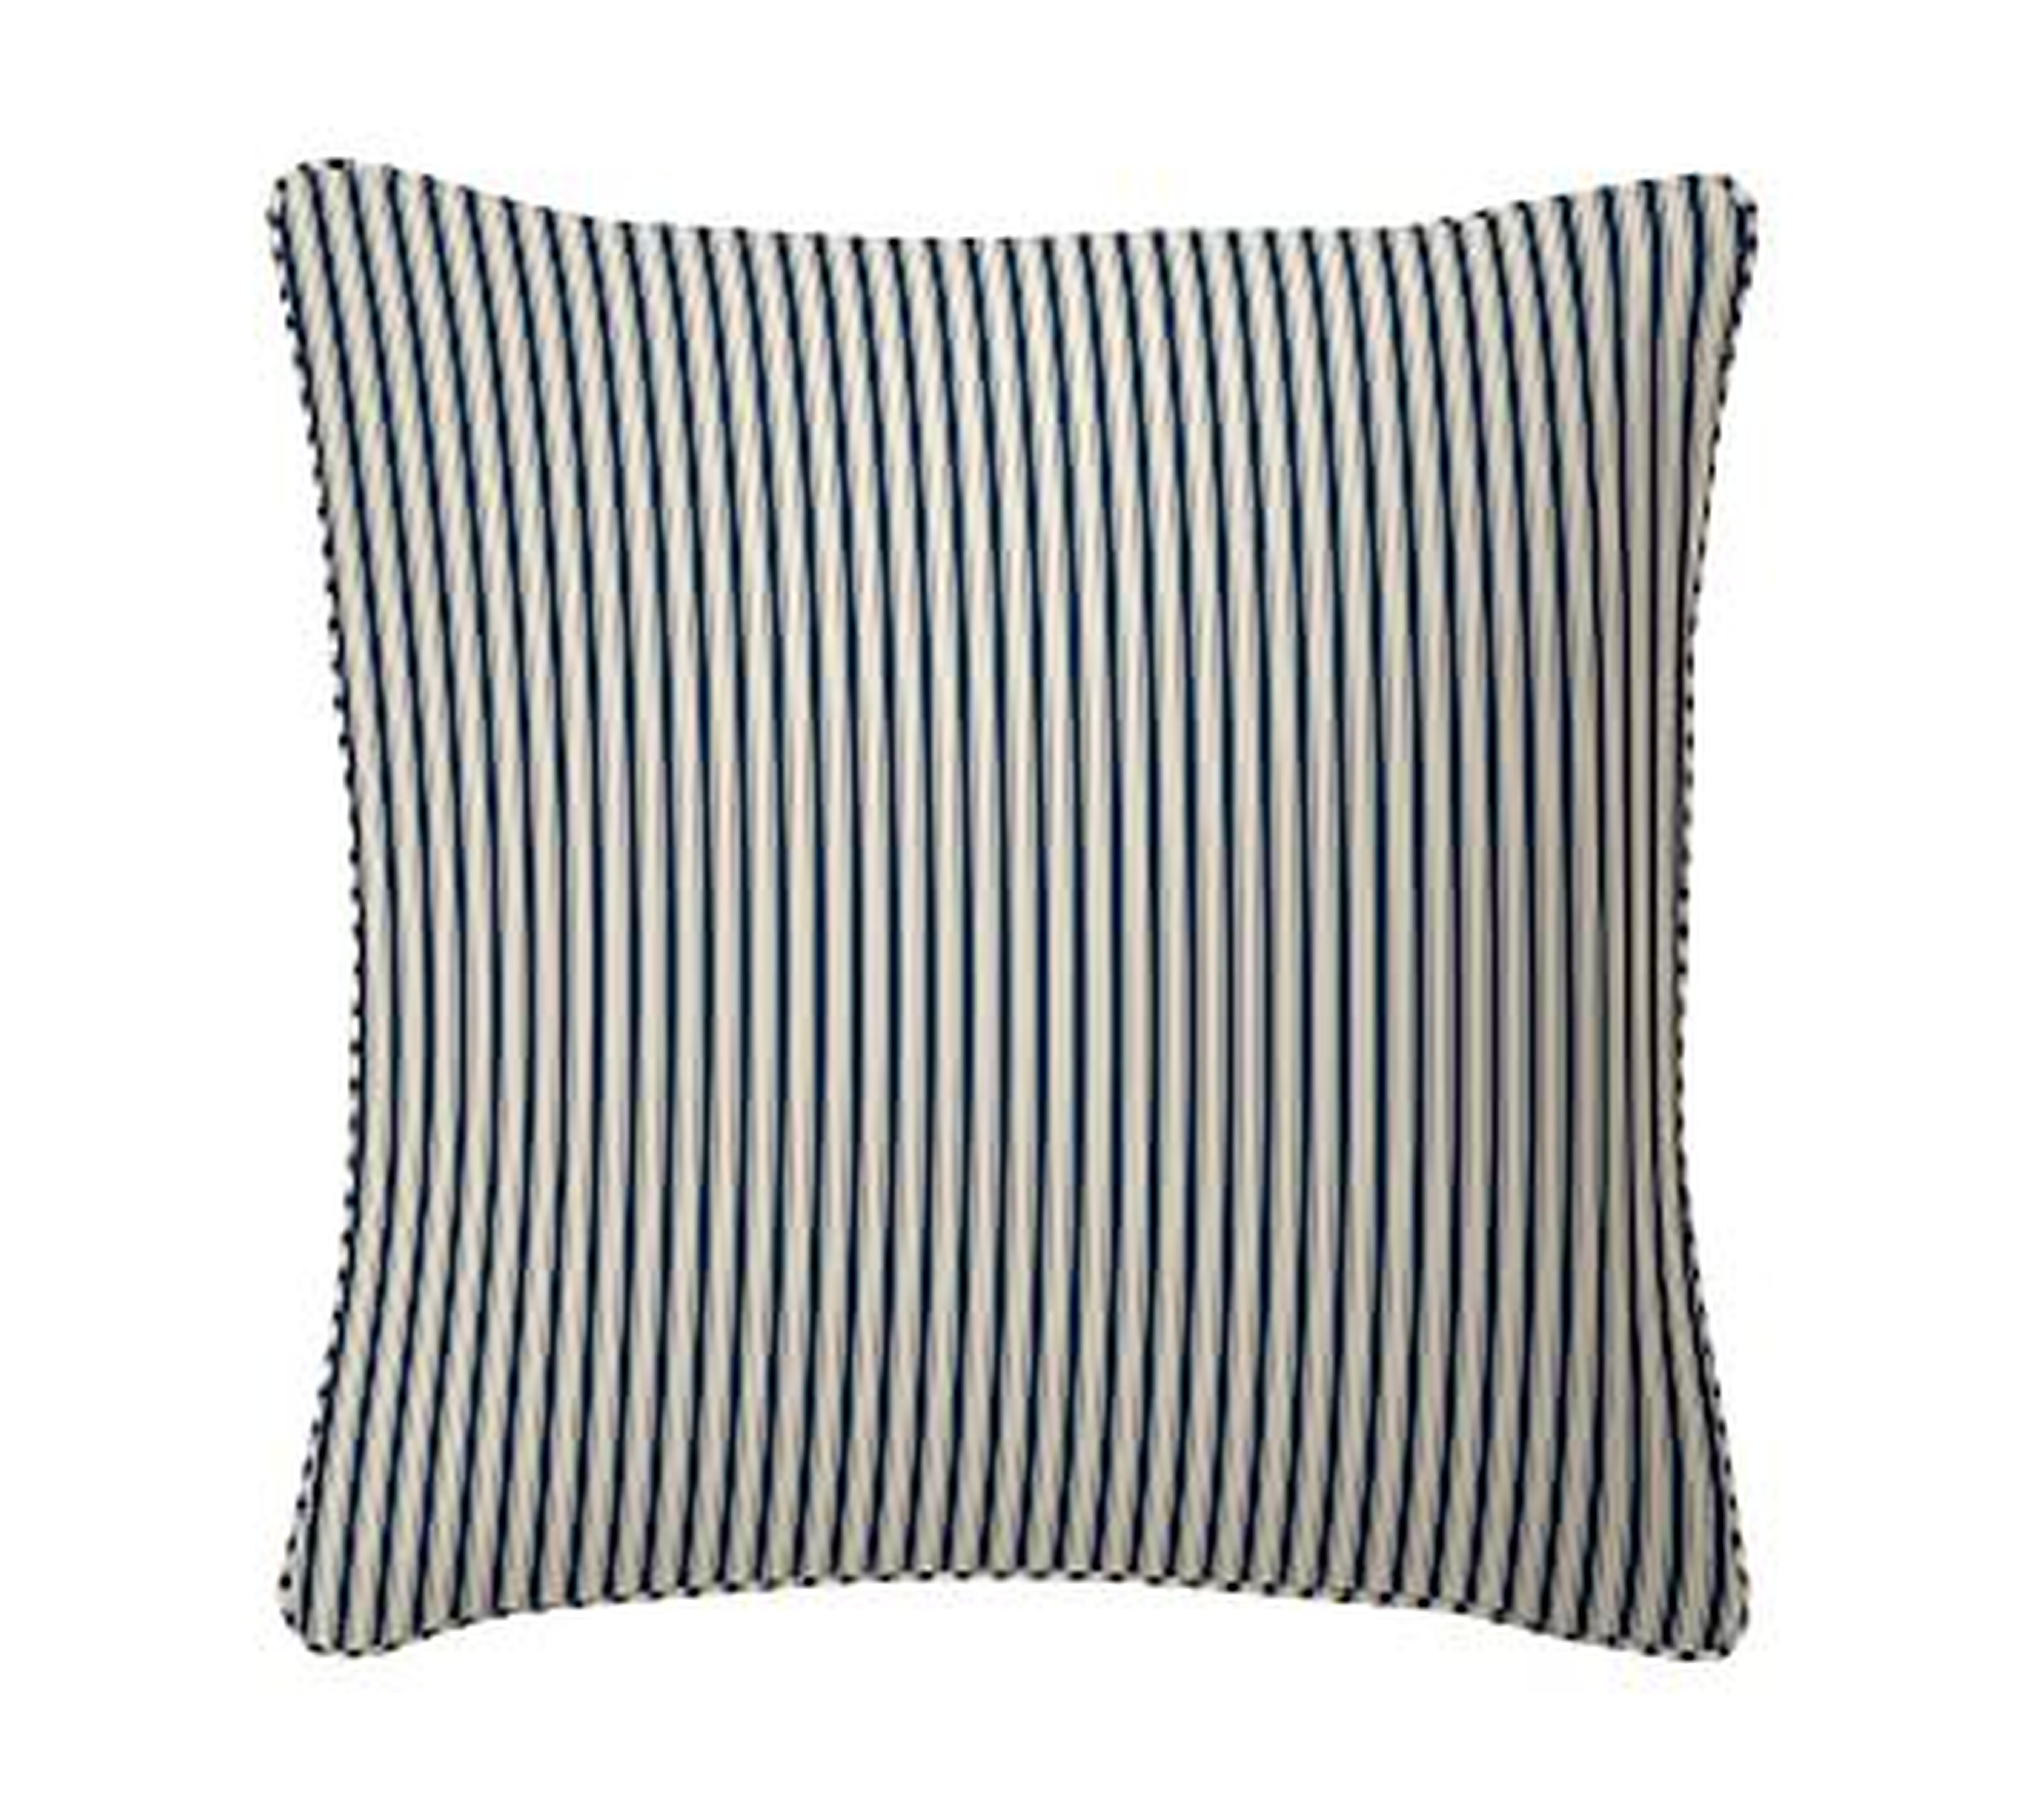 Sateen Stripe Print Pillow Cover, 20", Indigo - Pottery Barn